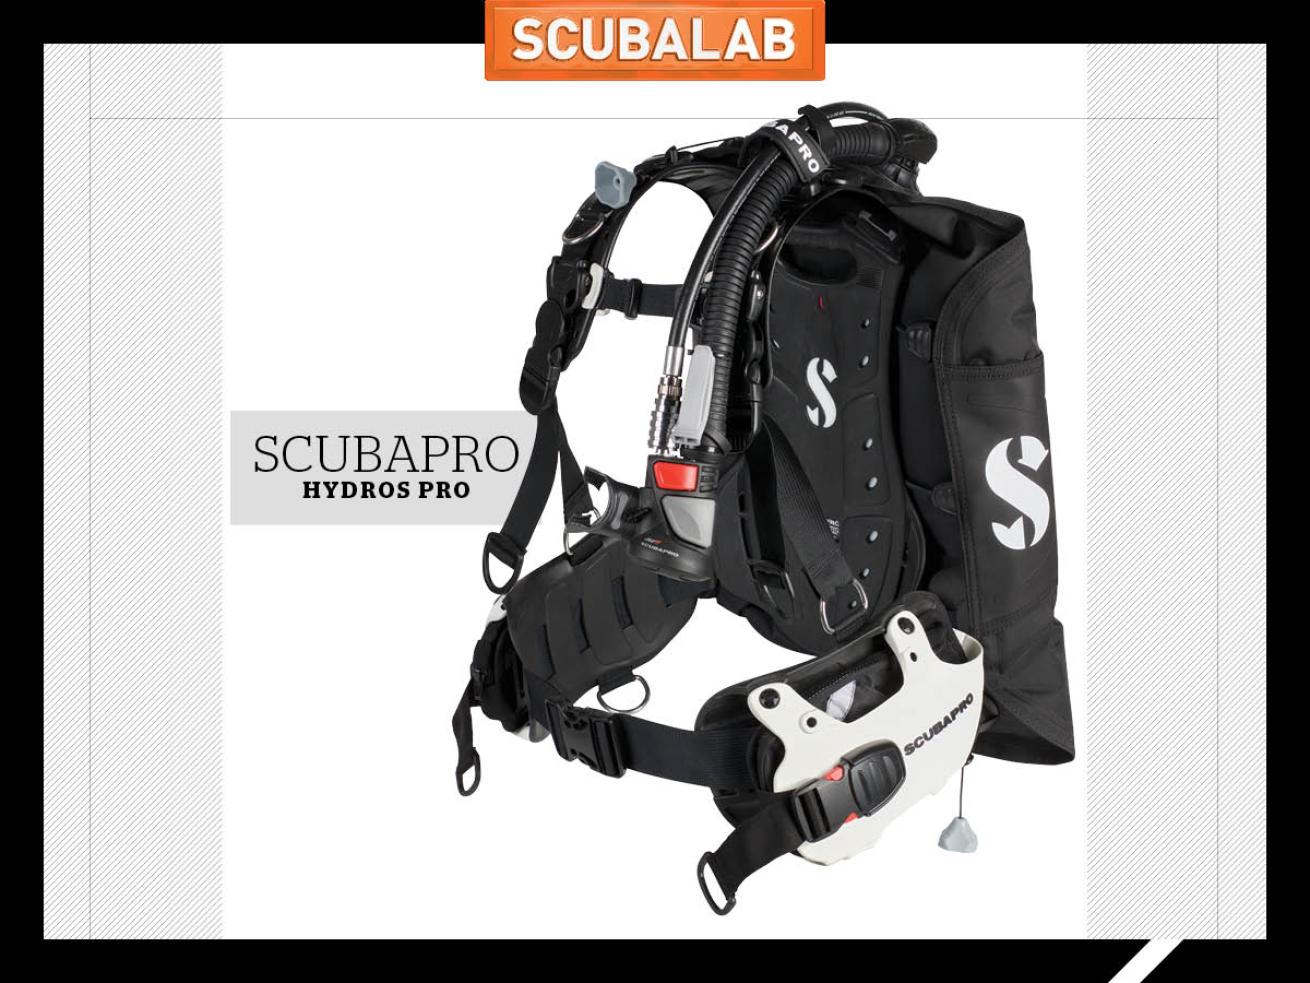 Scubapro Hydros Pro scuba diving BC ScubaLab gear